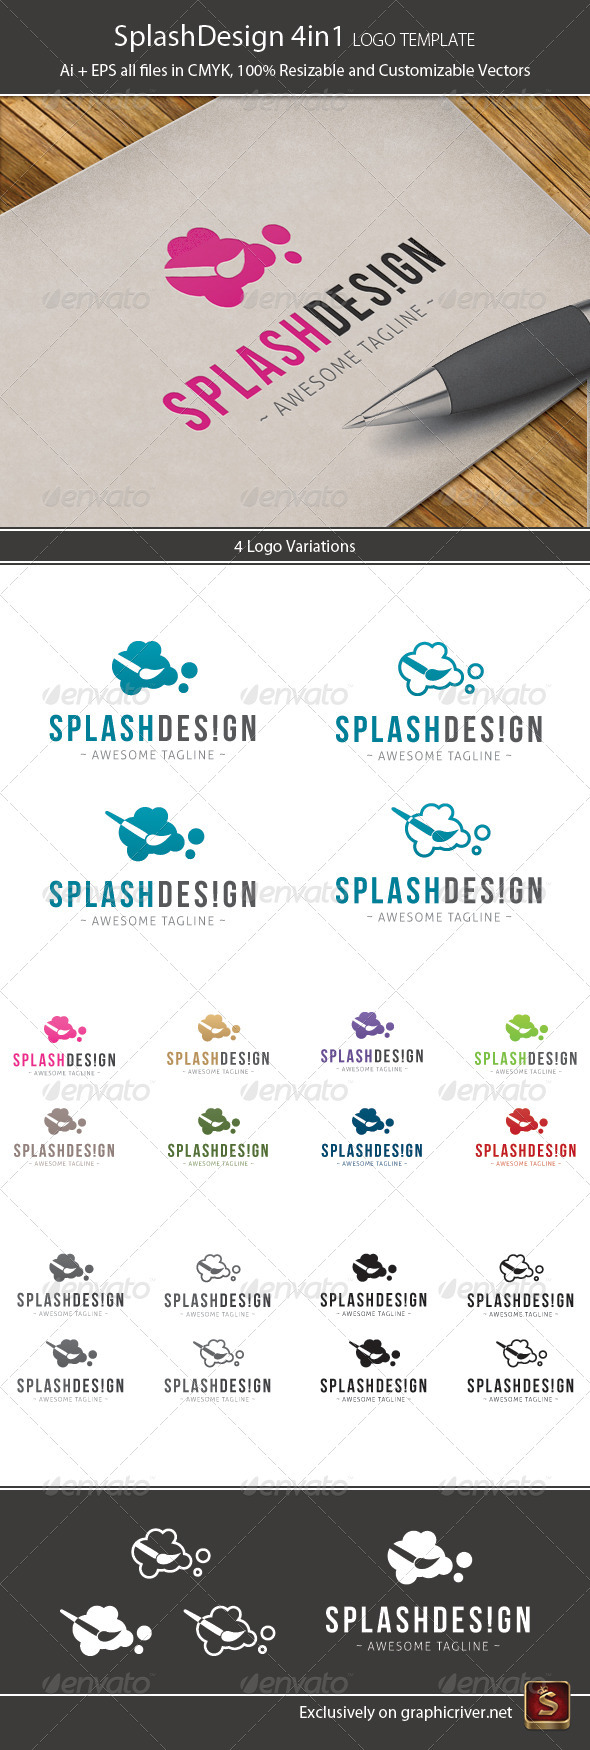 Splash Design 4in1 Logo Template